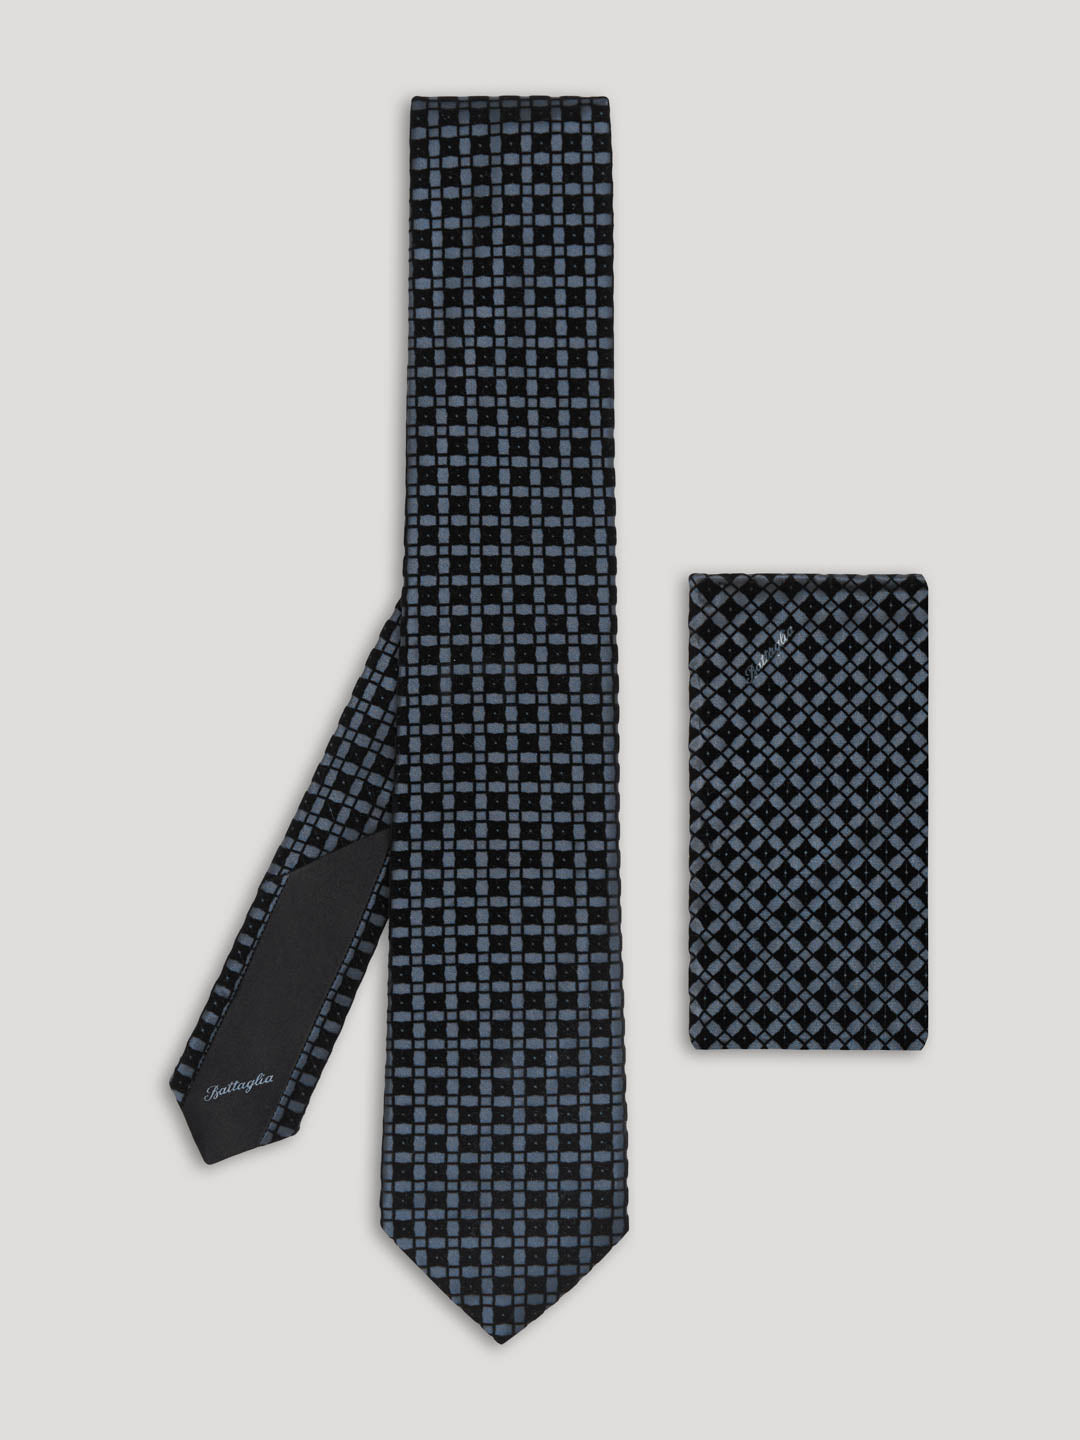 Blue check pattern silk tie with matching handkerchief. 